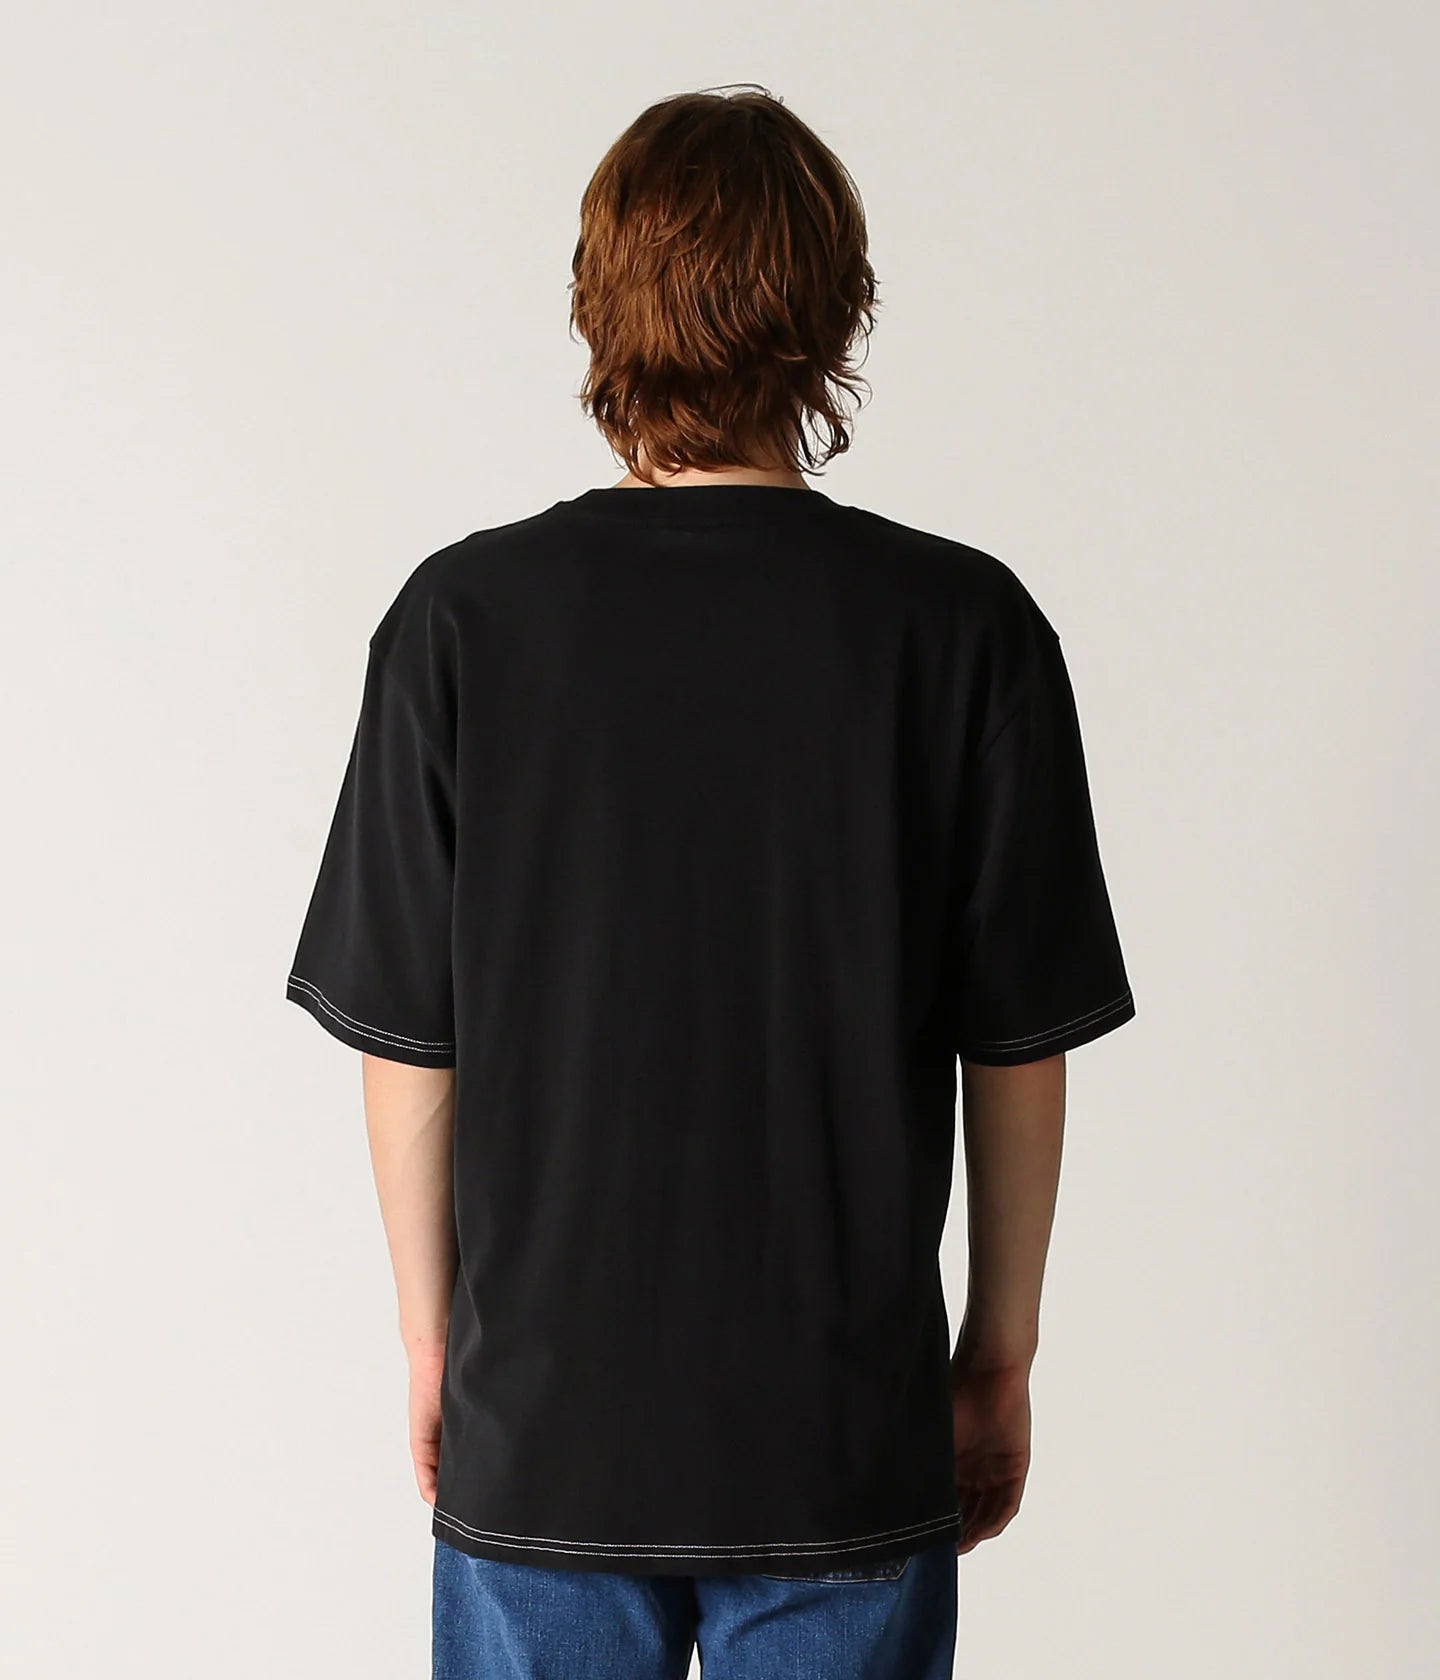 Scope Oversized T-Shirt - Black